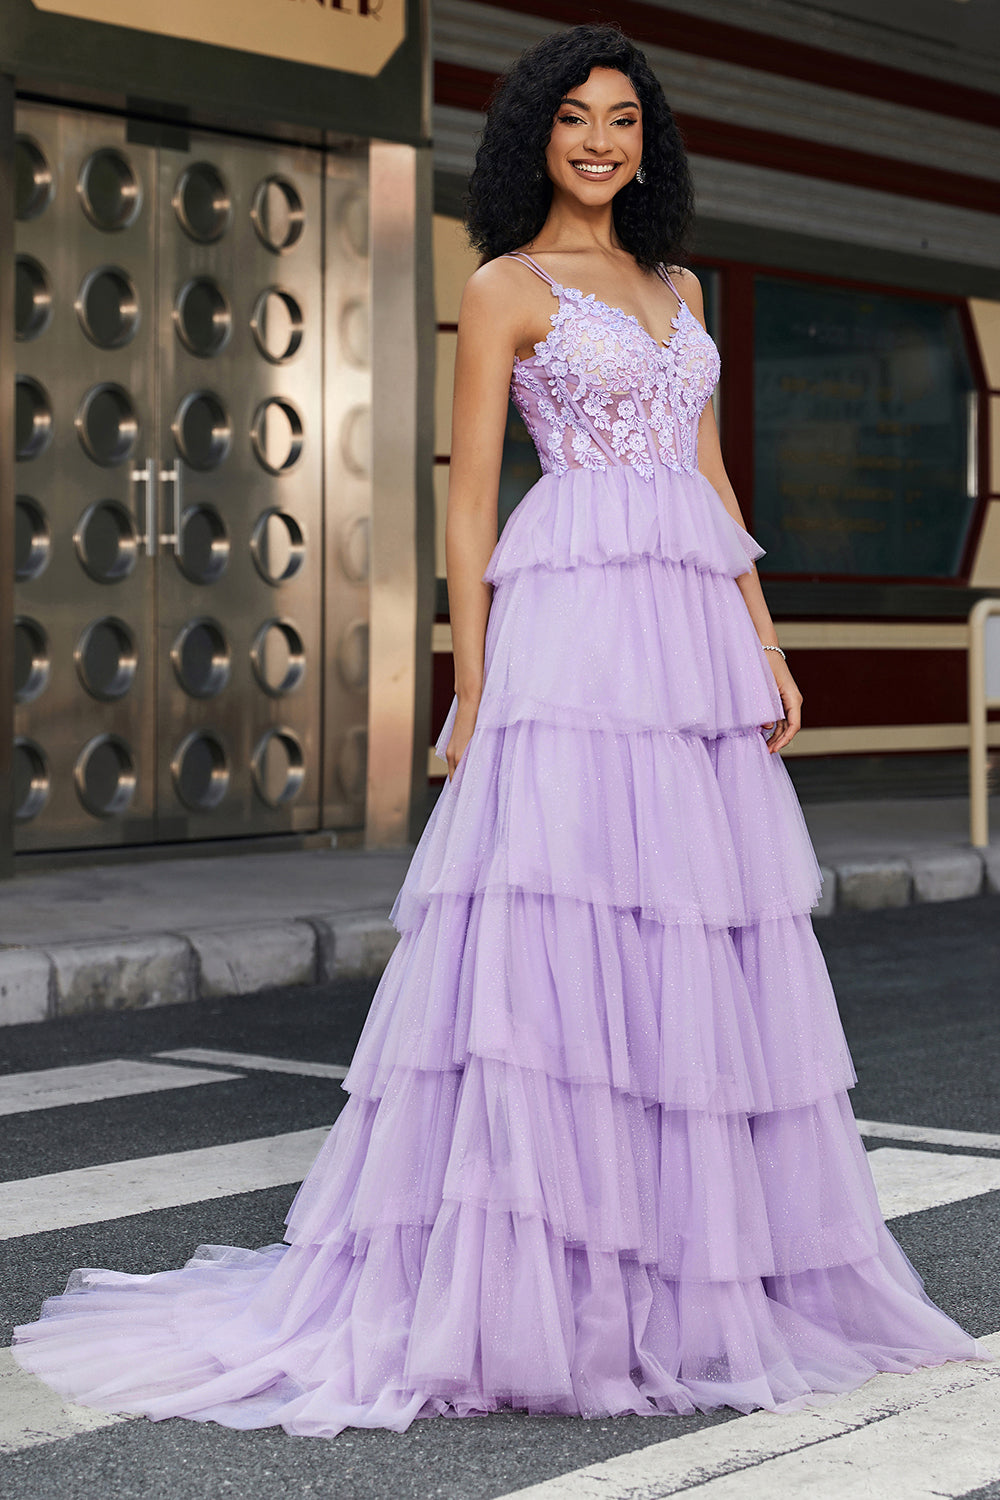 Princess A Line Spaghetti Straps Lilac Corset Prom Dress with Appliques Ruffles